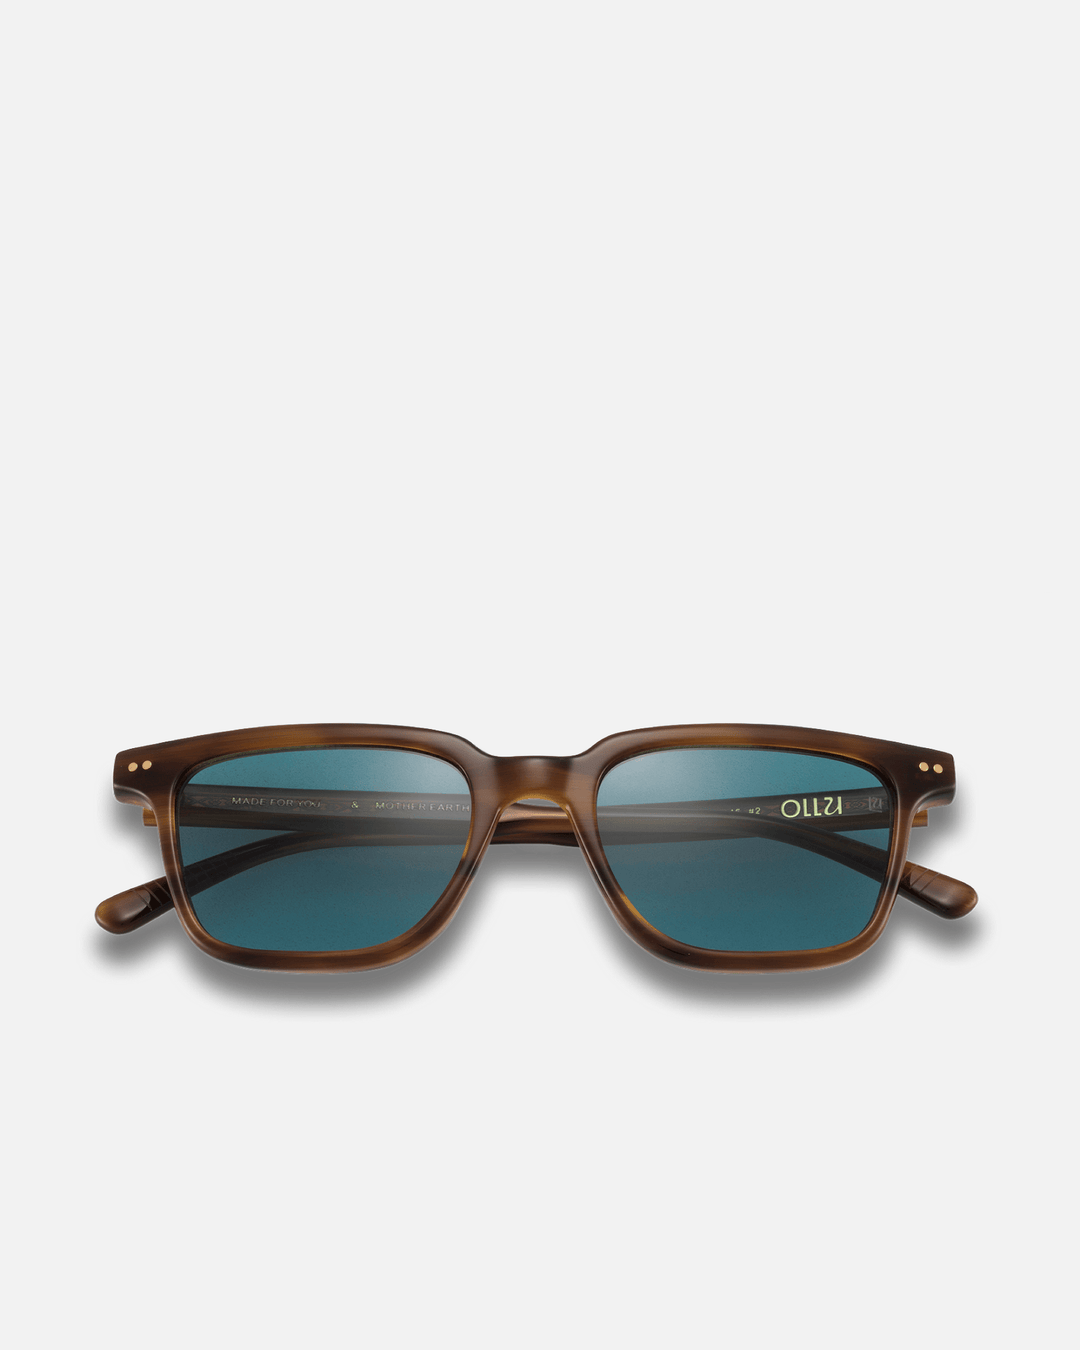 PEPINO Bio-Acetate Square Frame Sunglasses for Men & Women | Earth (Blue lens) | Sunnies Collection | OLLU